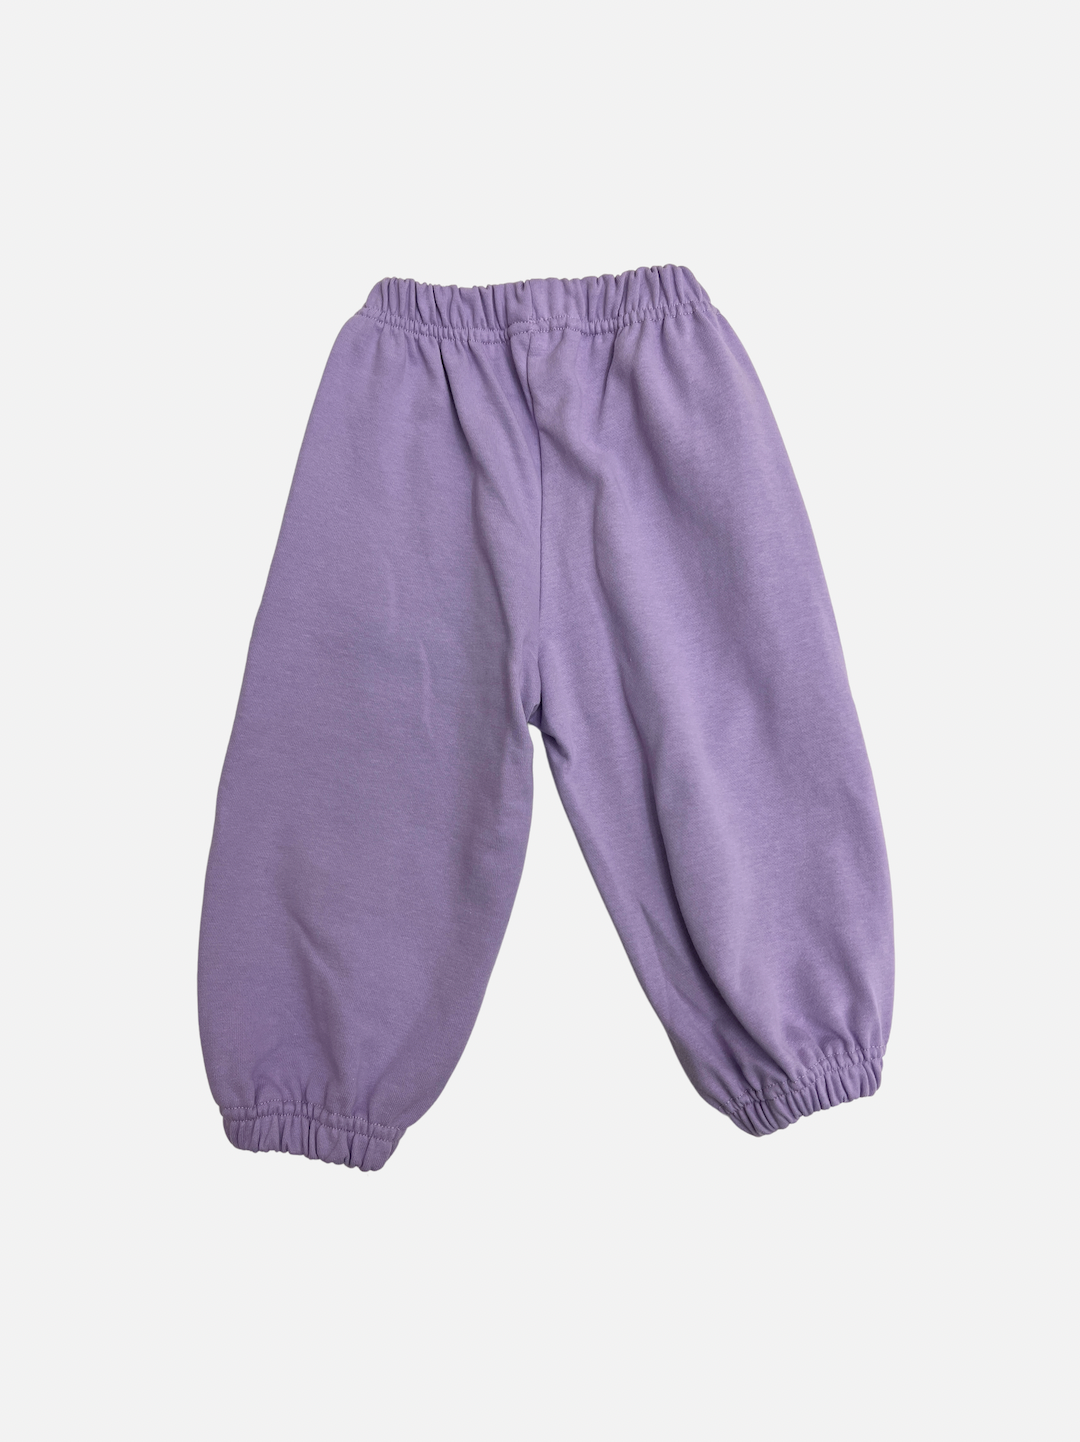 Purple | A pair of kids' sweatpants in pale purple, back view